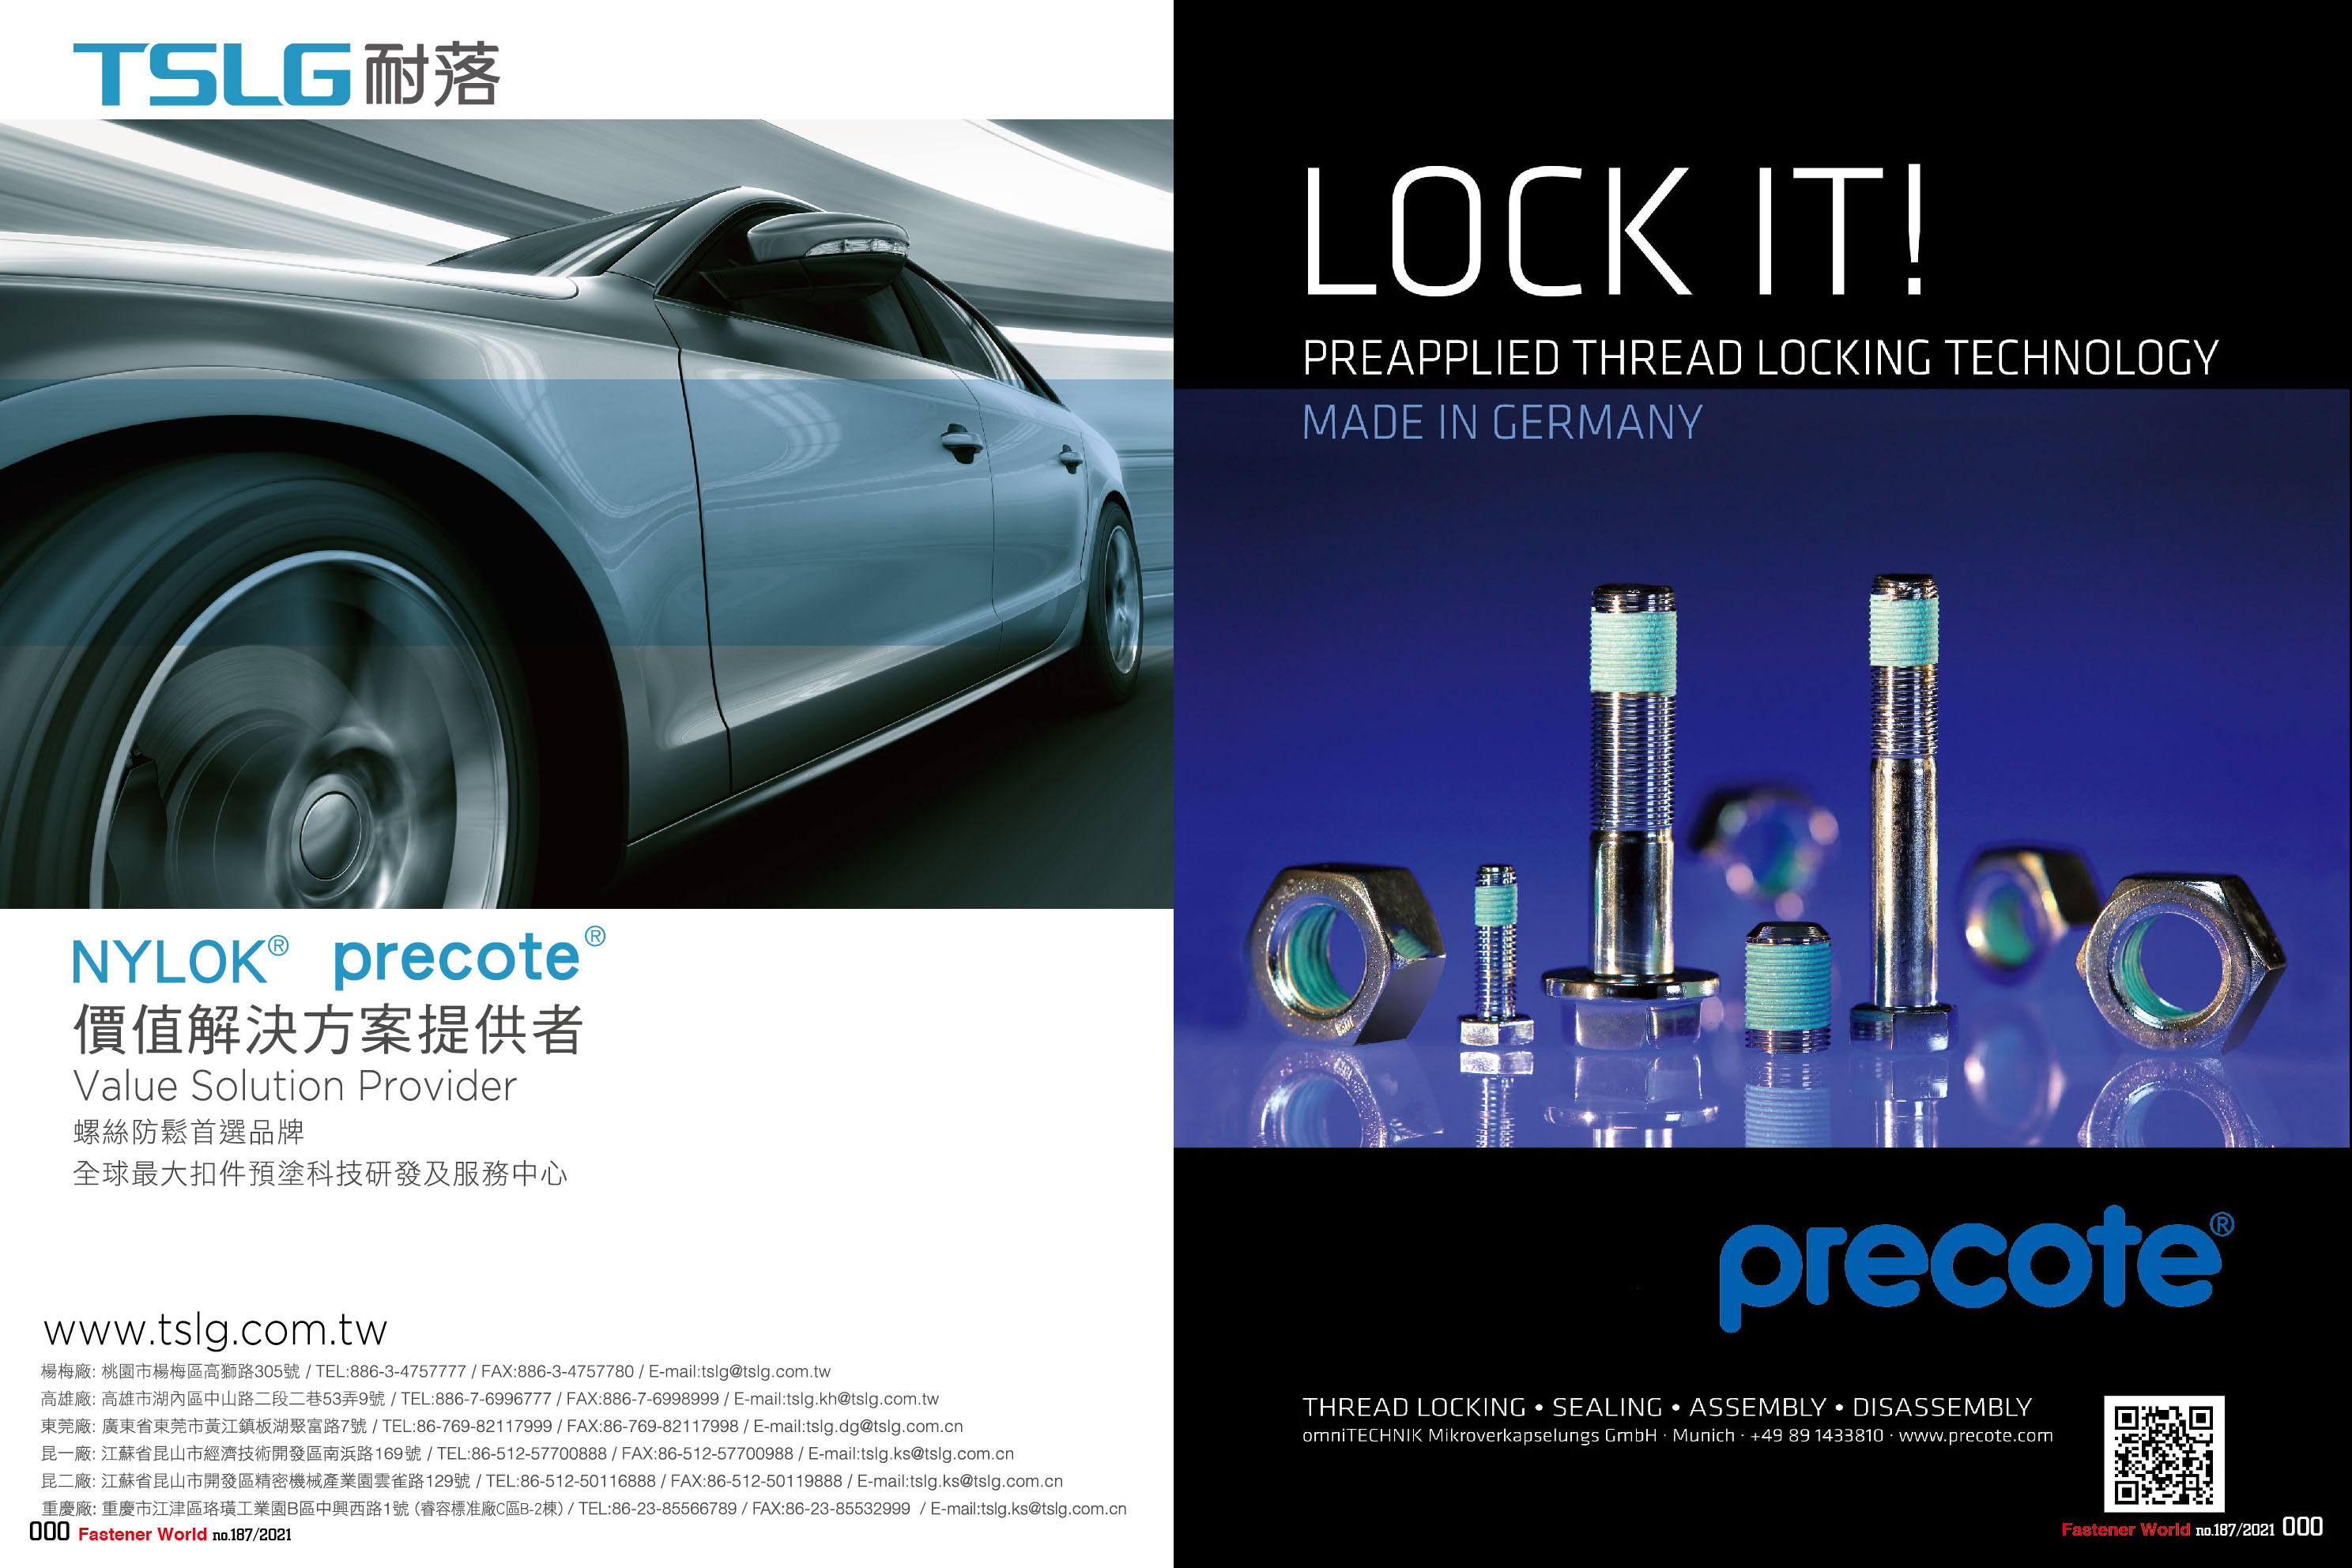 TAIWAN SELF-LOCKING CO., LTD. , Nylok, precote, Preapplied Thread Locking Technology, Thread Locking, Sealing, Assembly, Disassembly